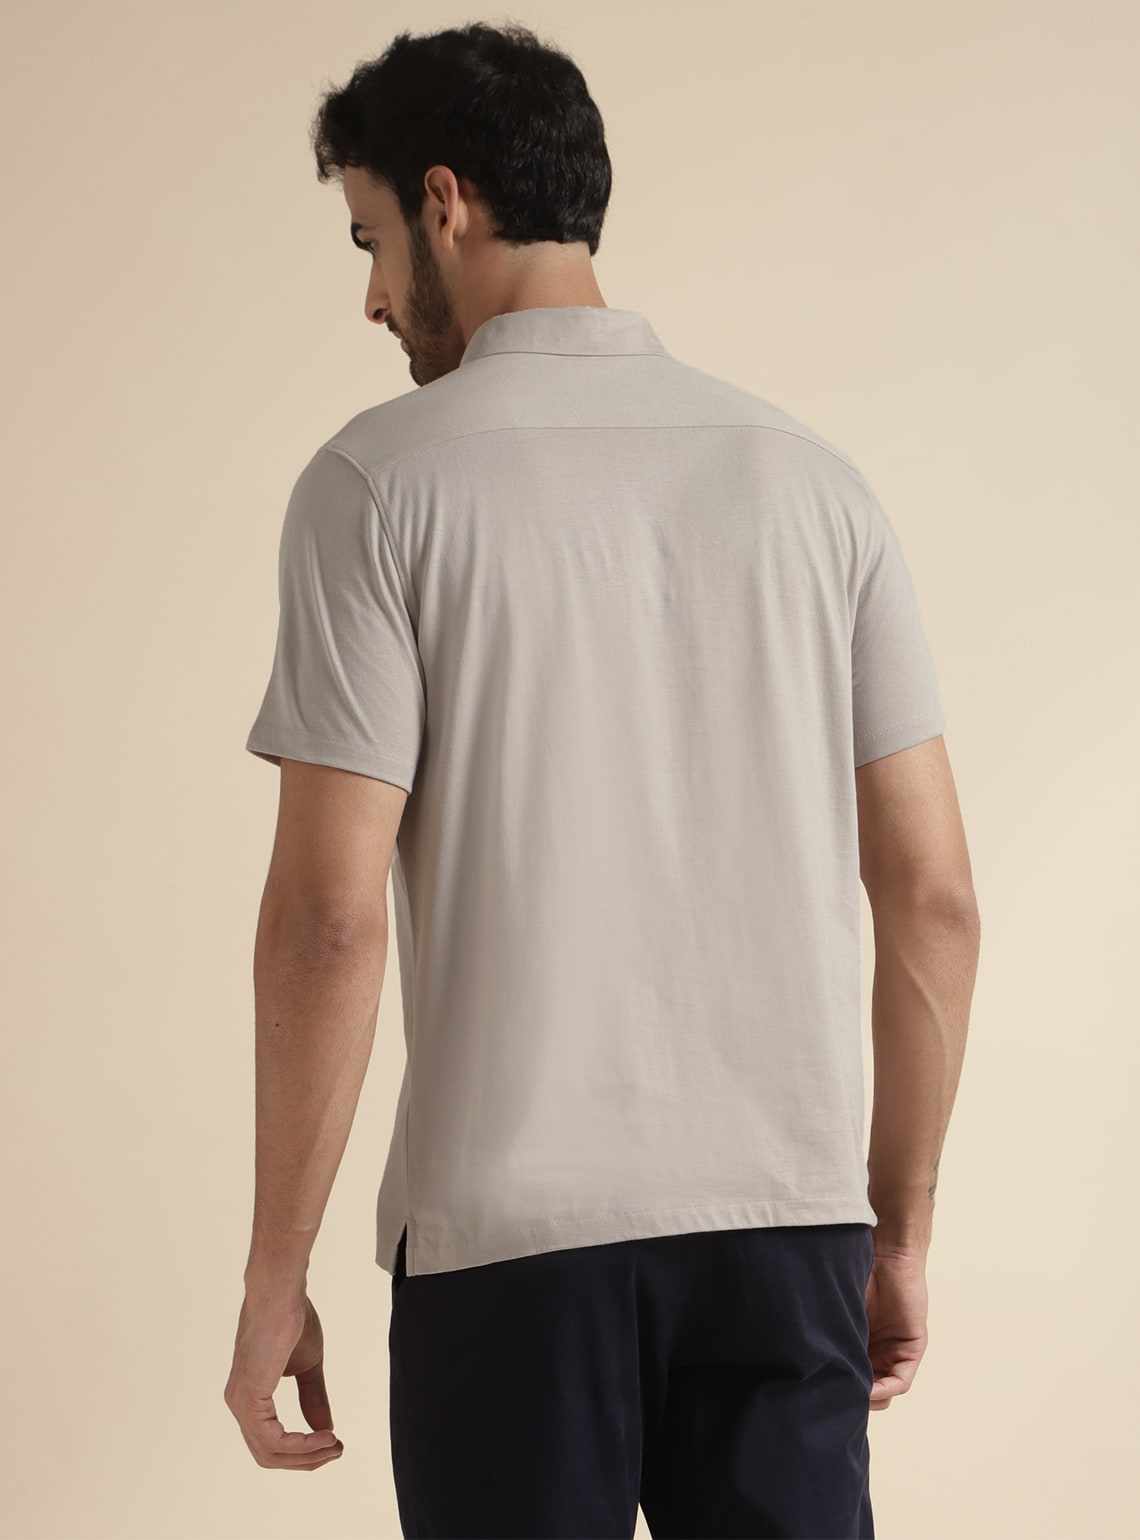 Ashbury Beige Shirt - Half